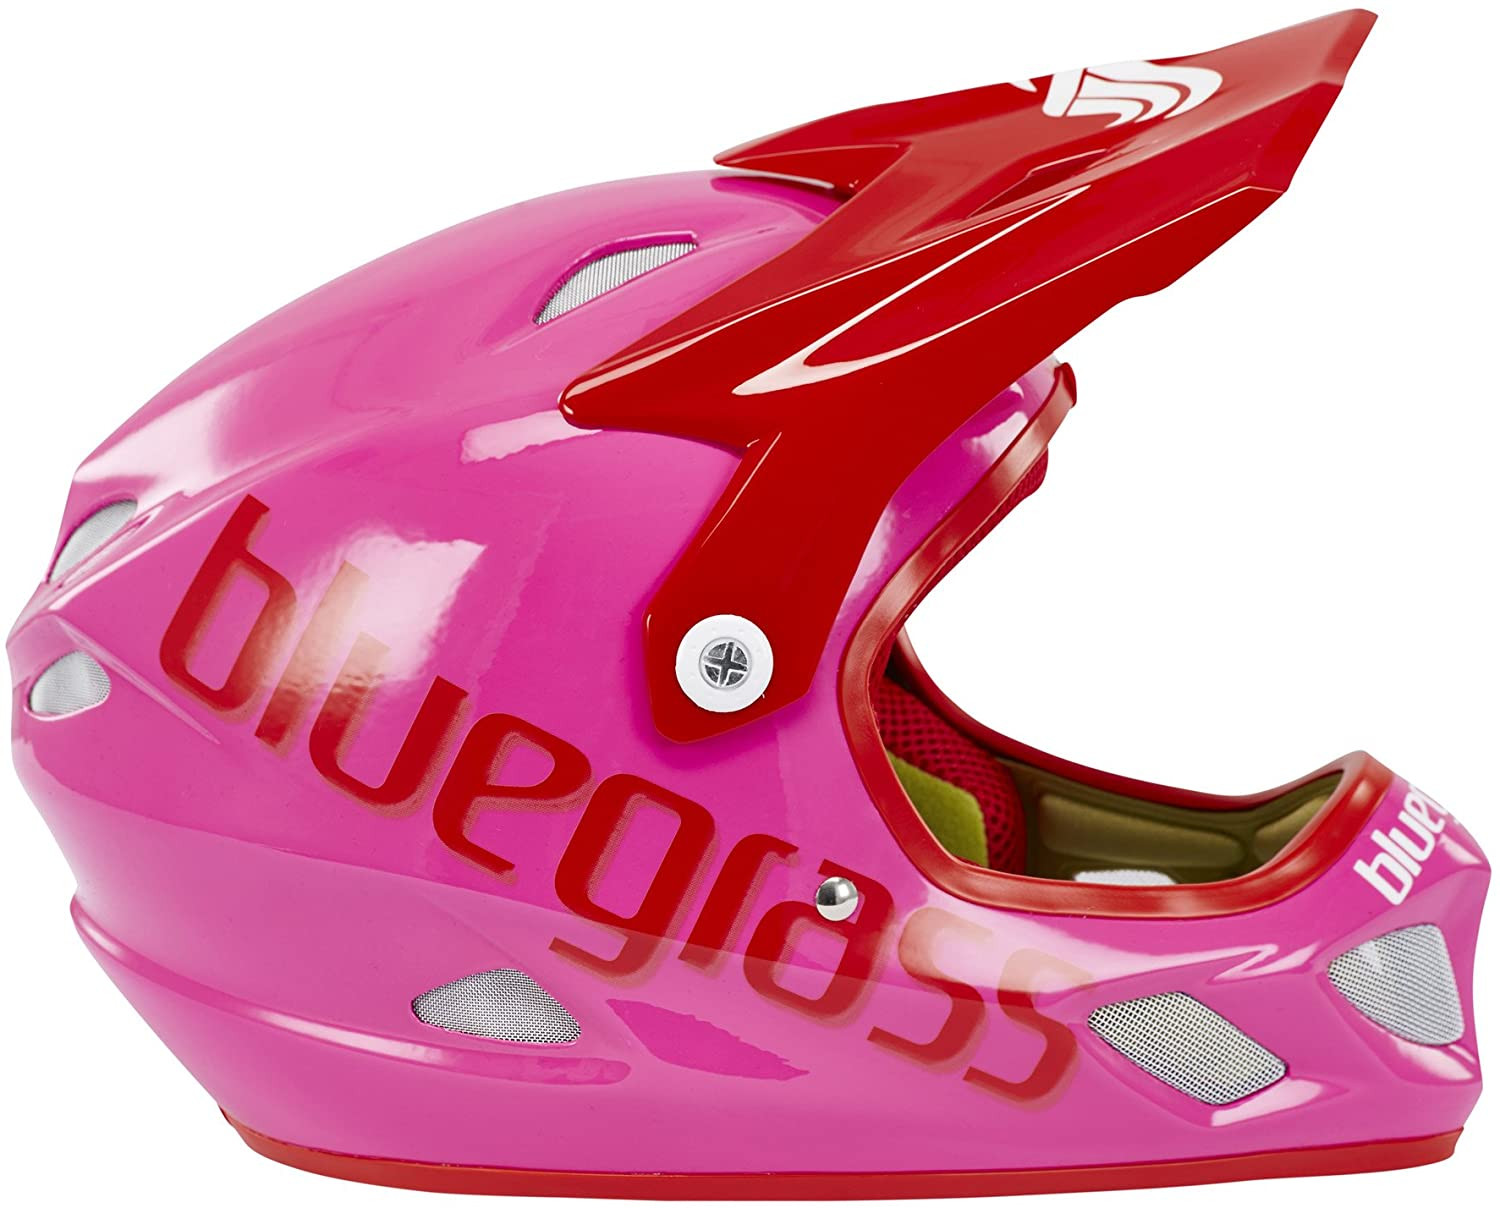 BLUEGRASS Helmet EXPLICIT Size L Pink (3HELG01L0PK)